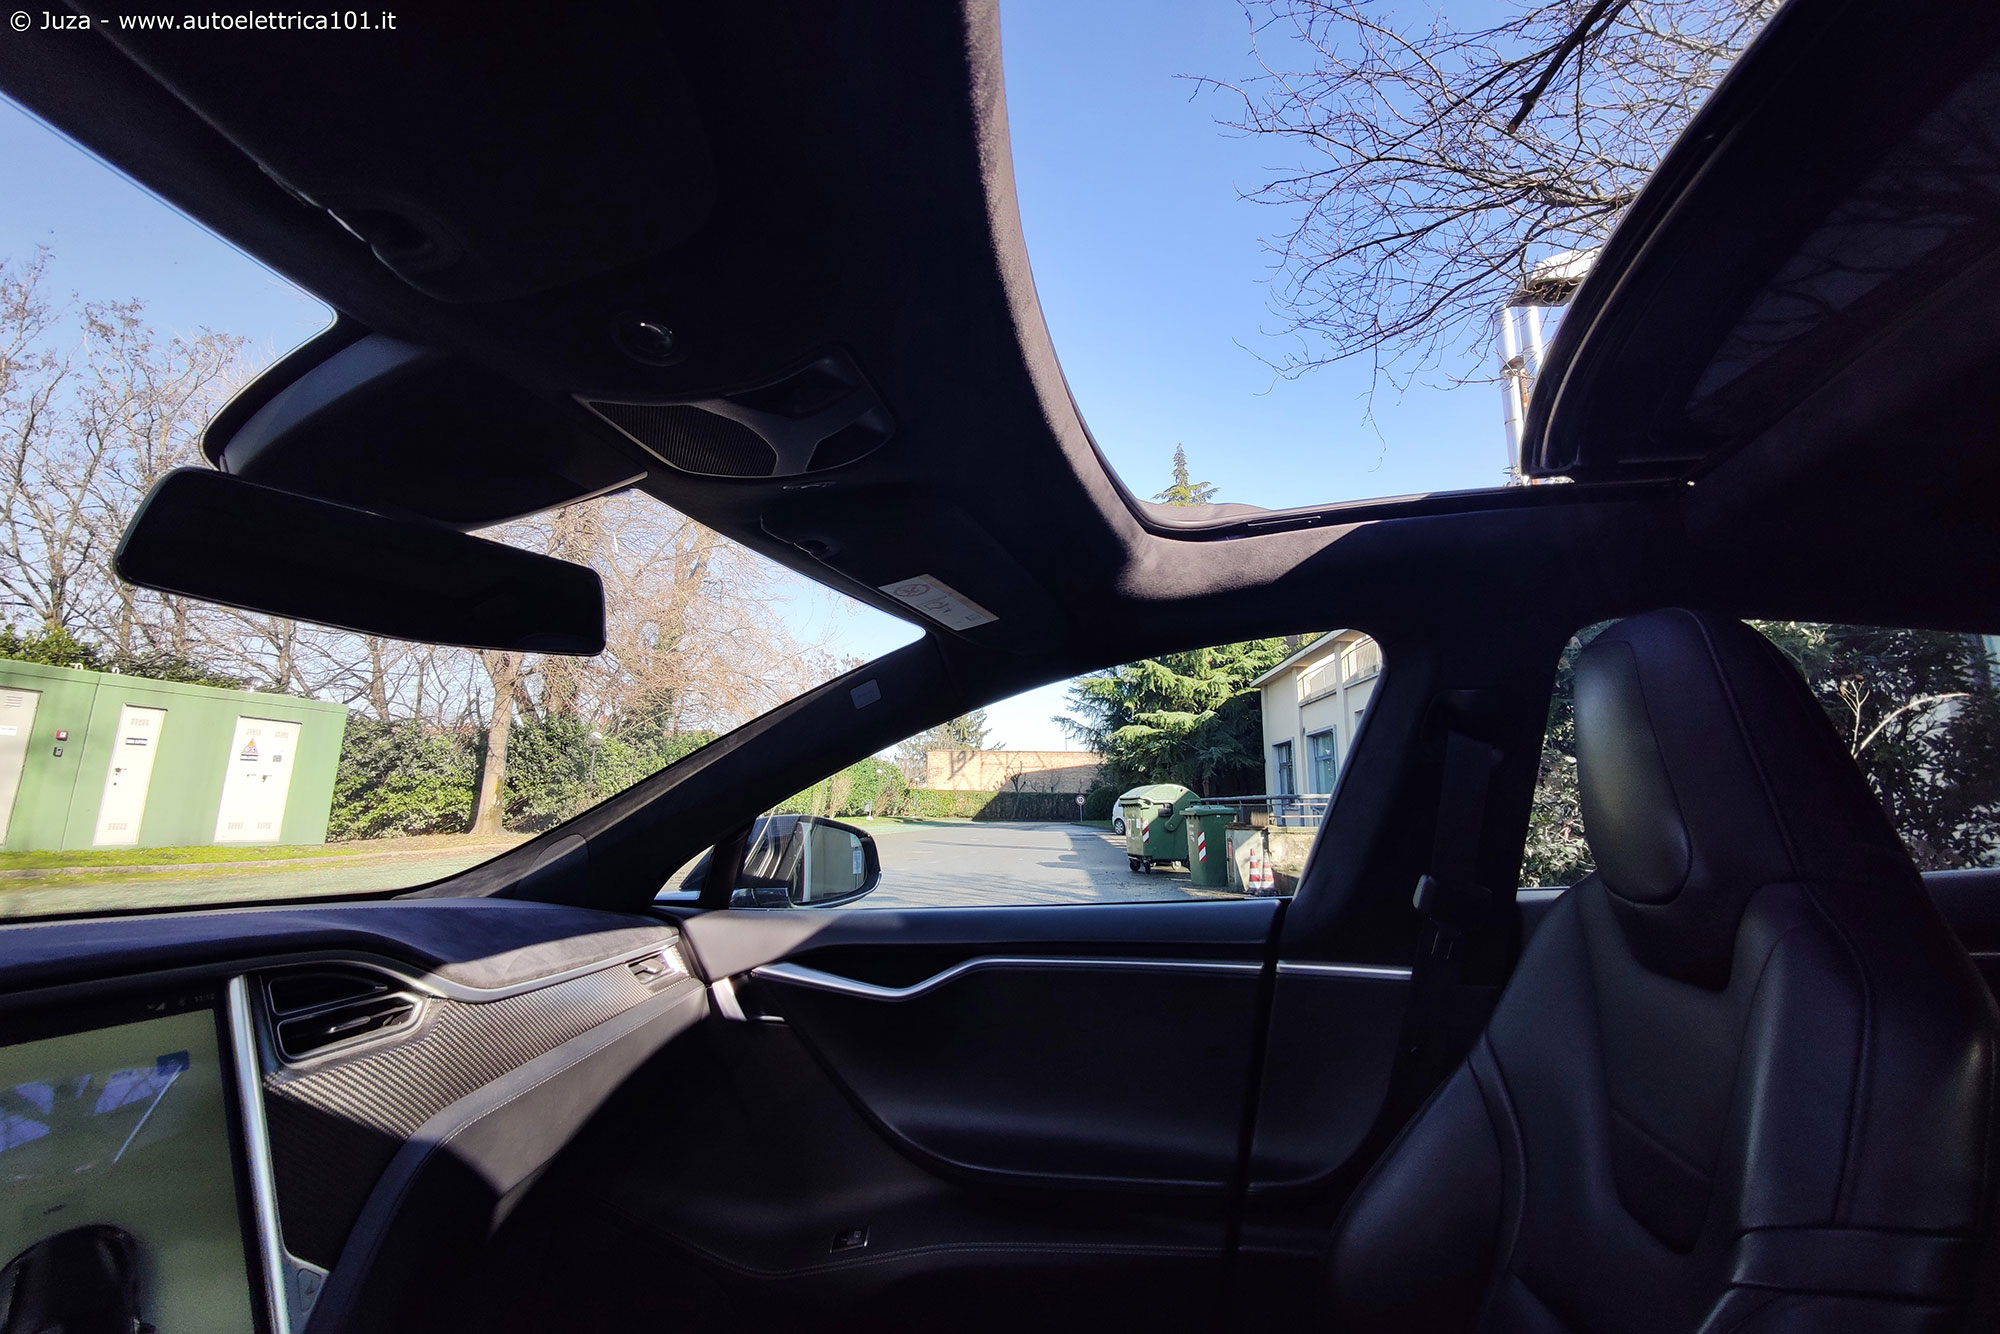 Recensione Tesla Model S P90D, interni